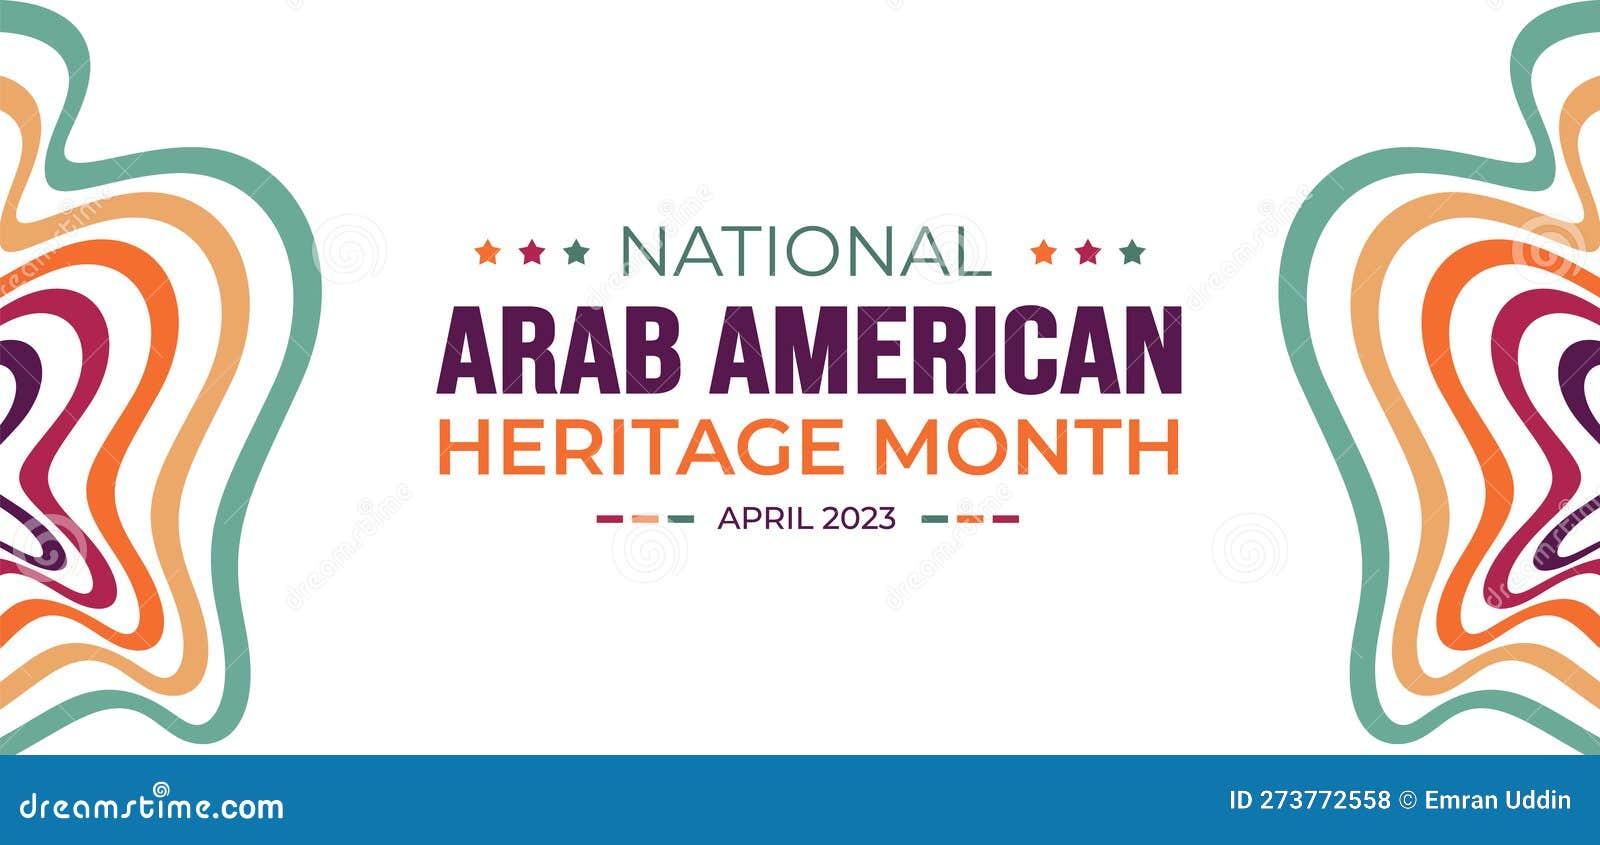 National Arab American Heritage Month Background. Arab American